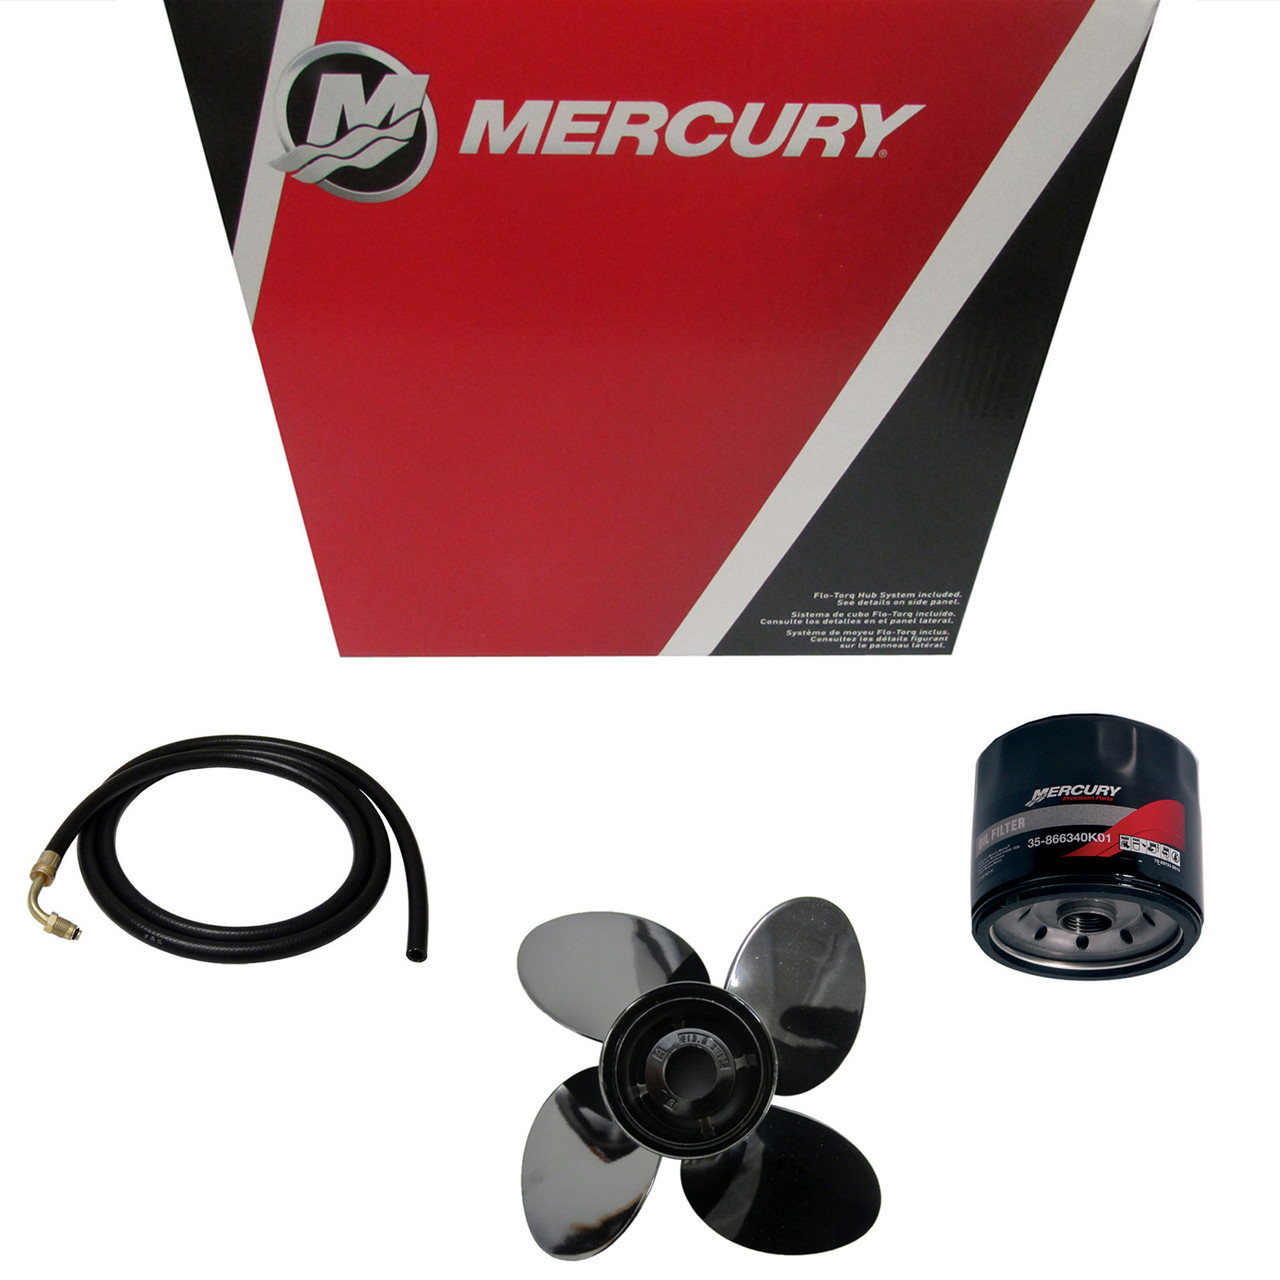 Mercury Marine / Mercruiser New OEM Lifting Eye, 879194119